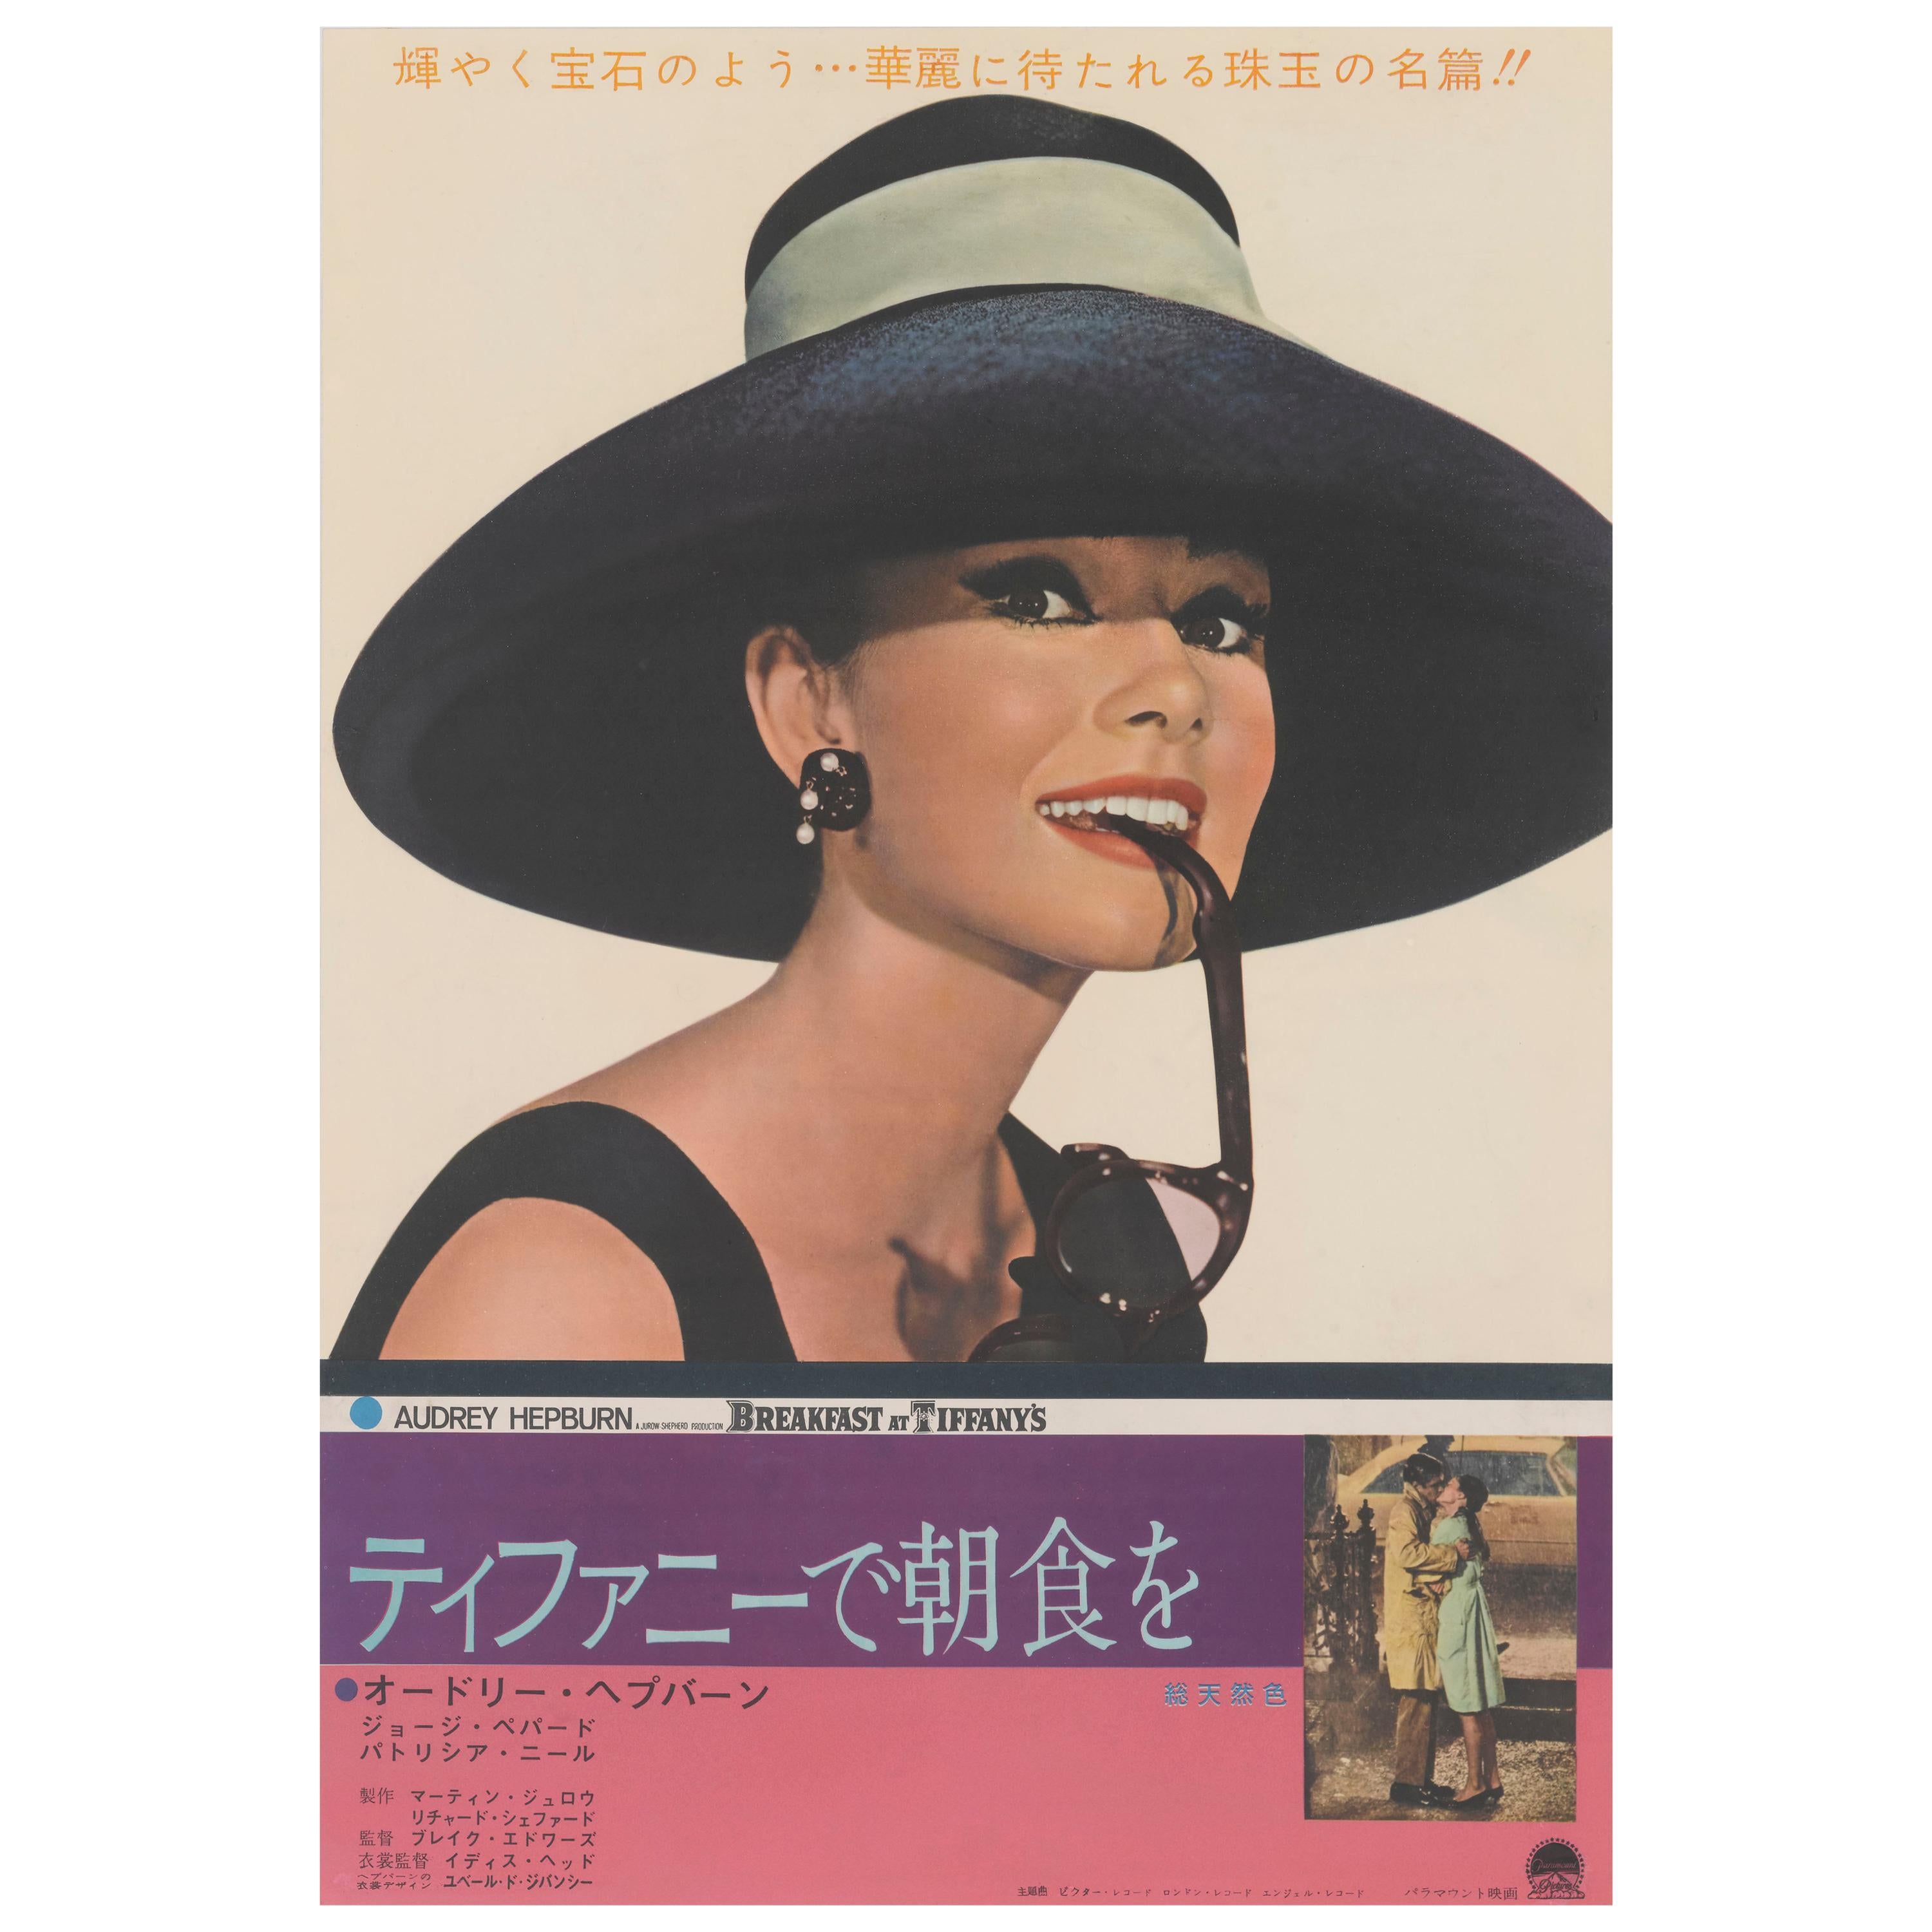 "Breakfast at Tiffany's" Original Japanese Film Poster